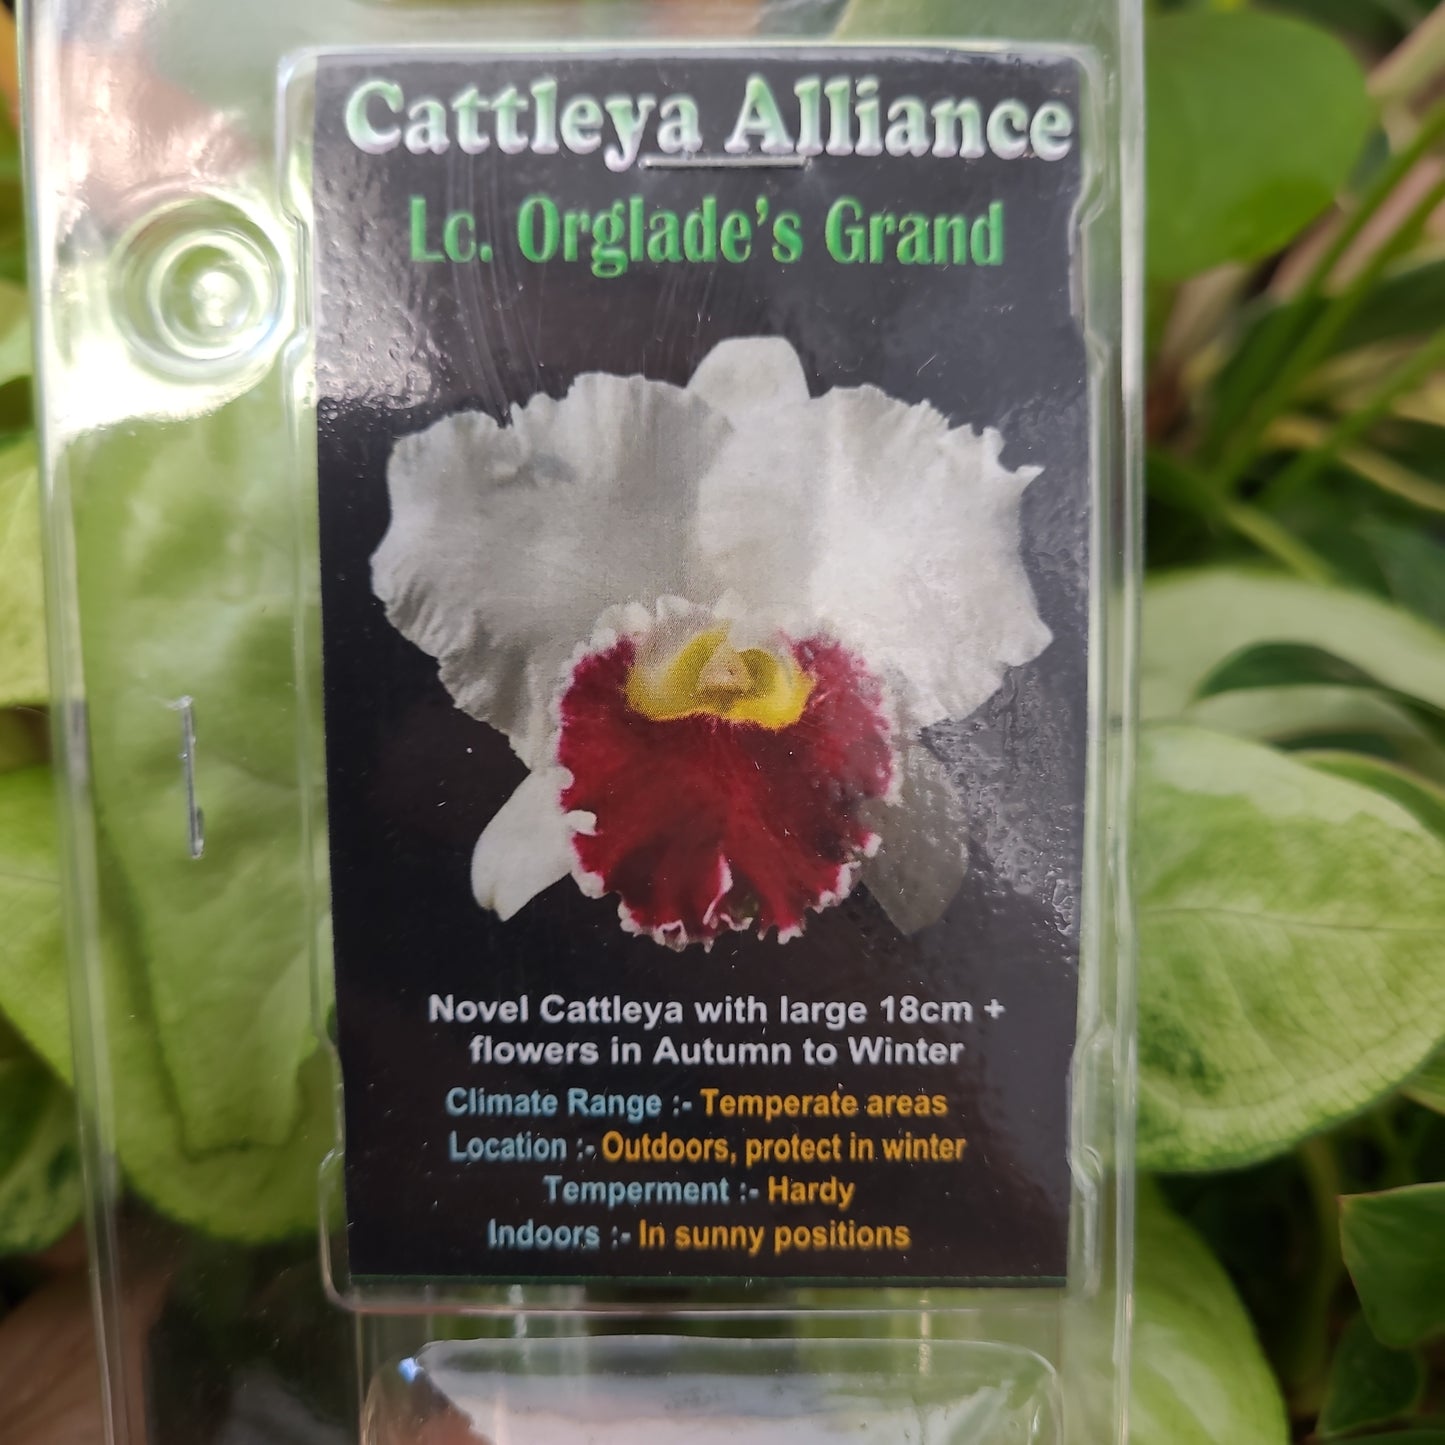 Cattleya Alliance Lc. Orglade's Grand